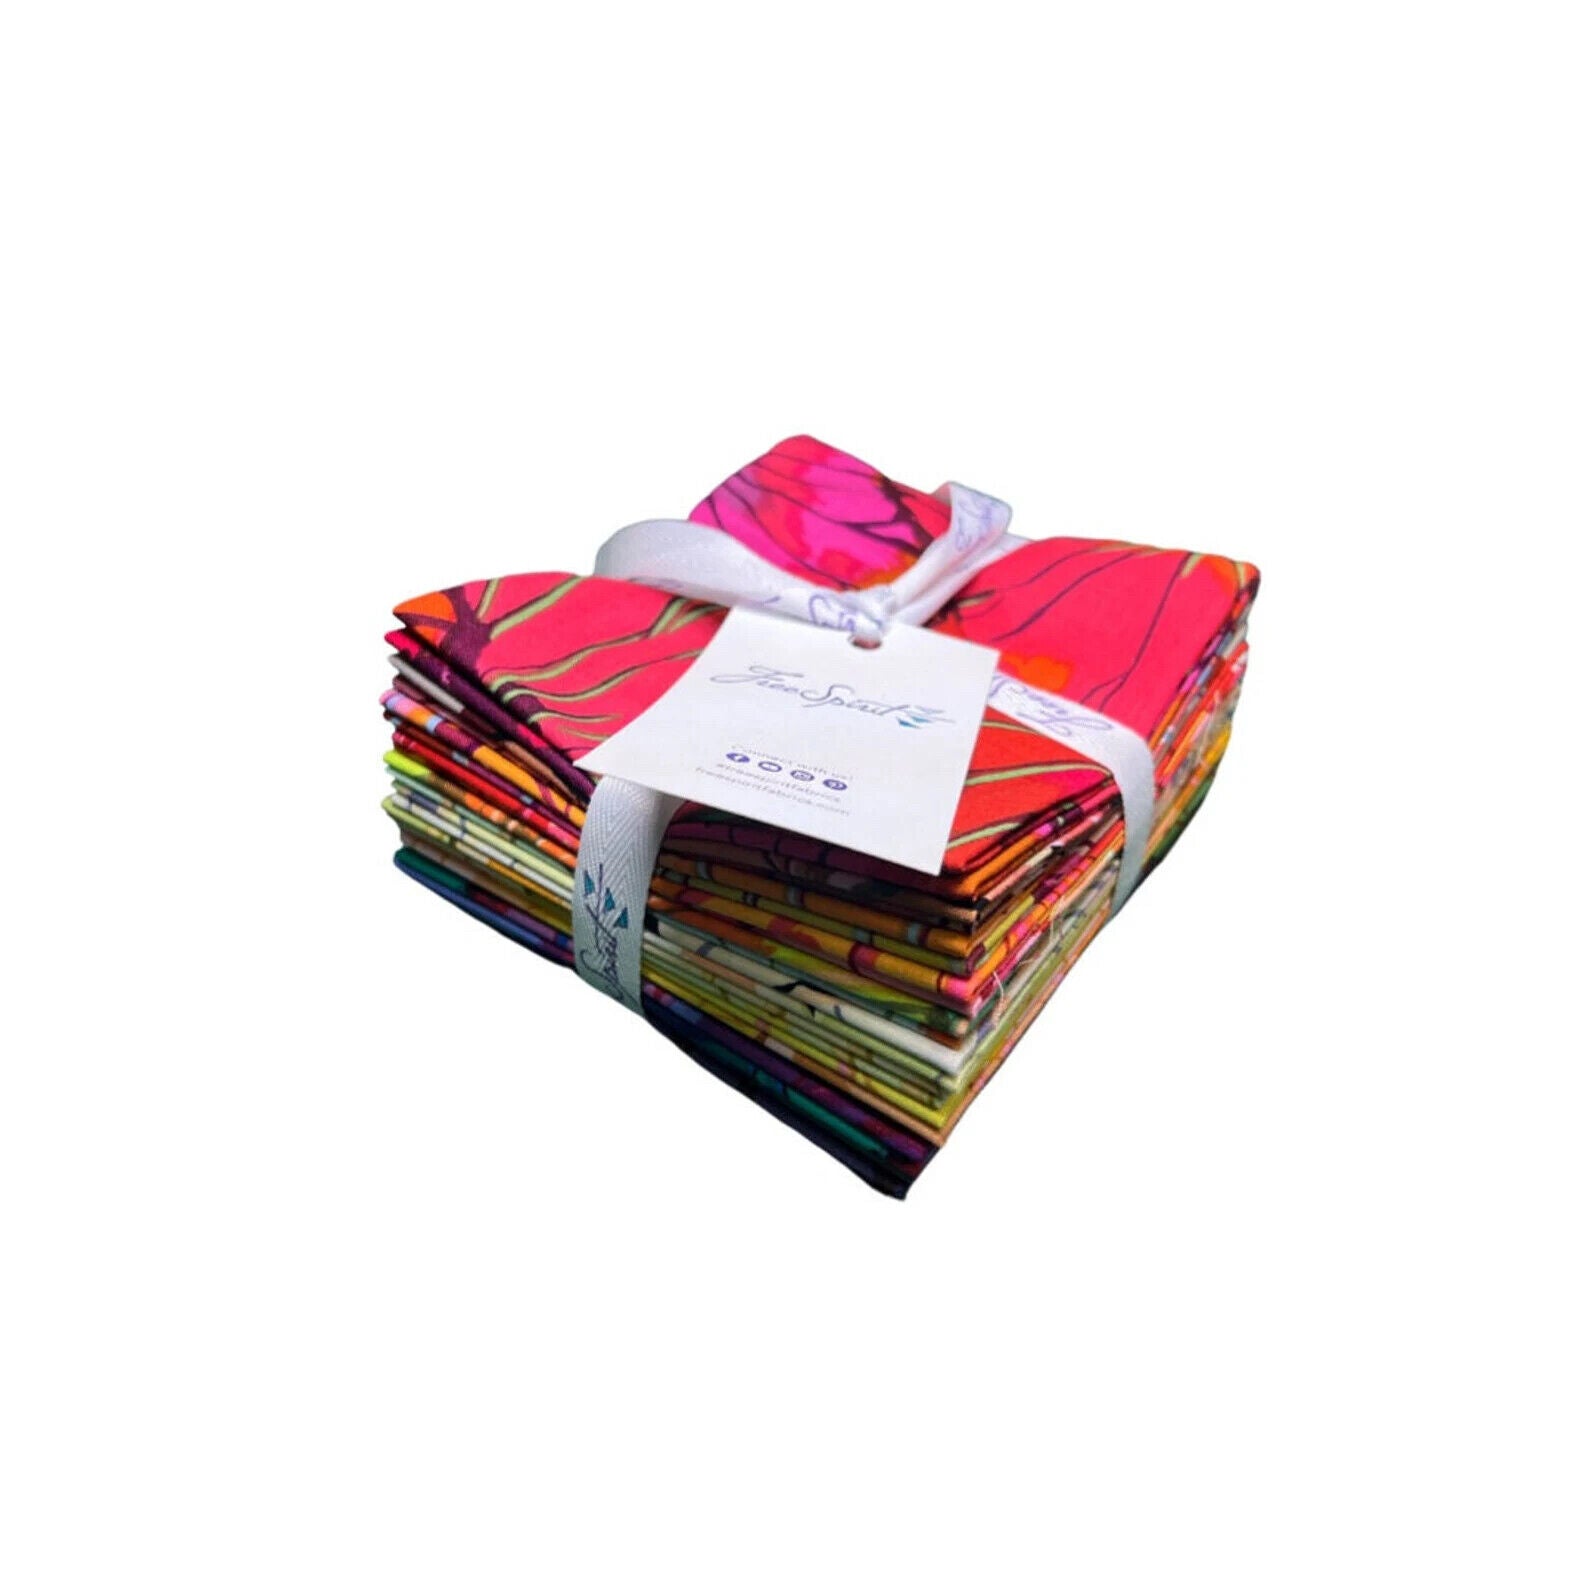 Lotus Leaf by Kaffe Fassett - Fat Quarter Bundle - 12pcs - Cotton Fabric